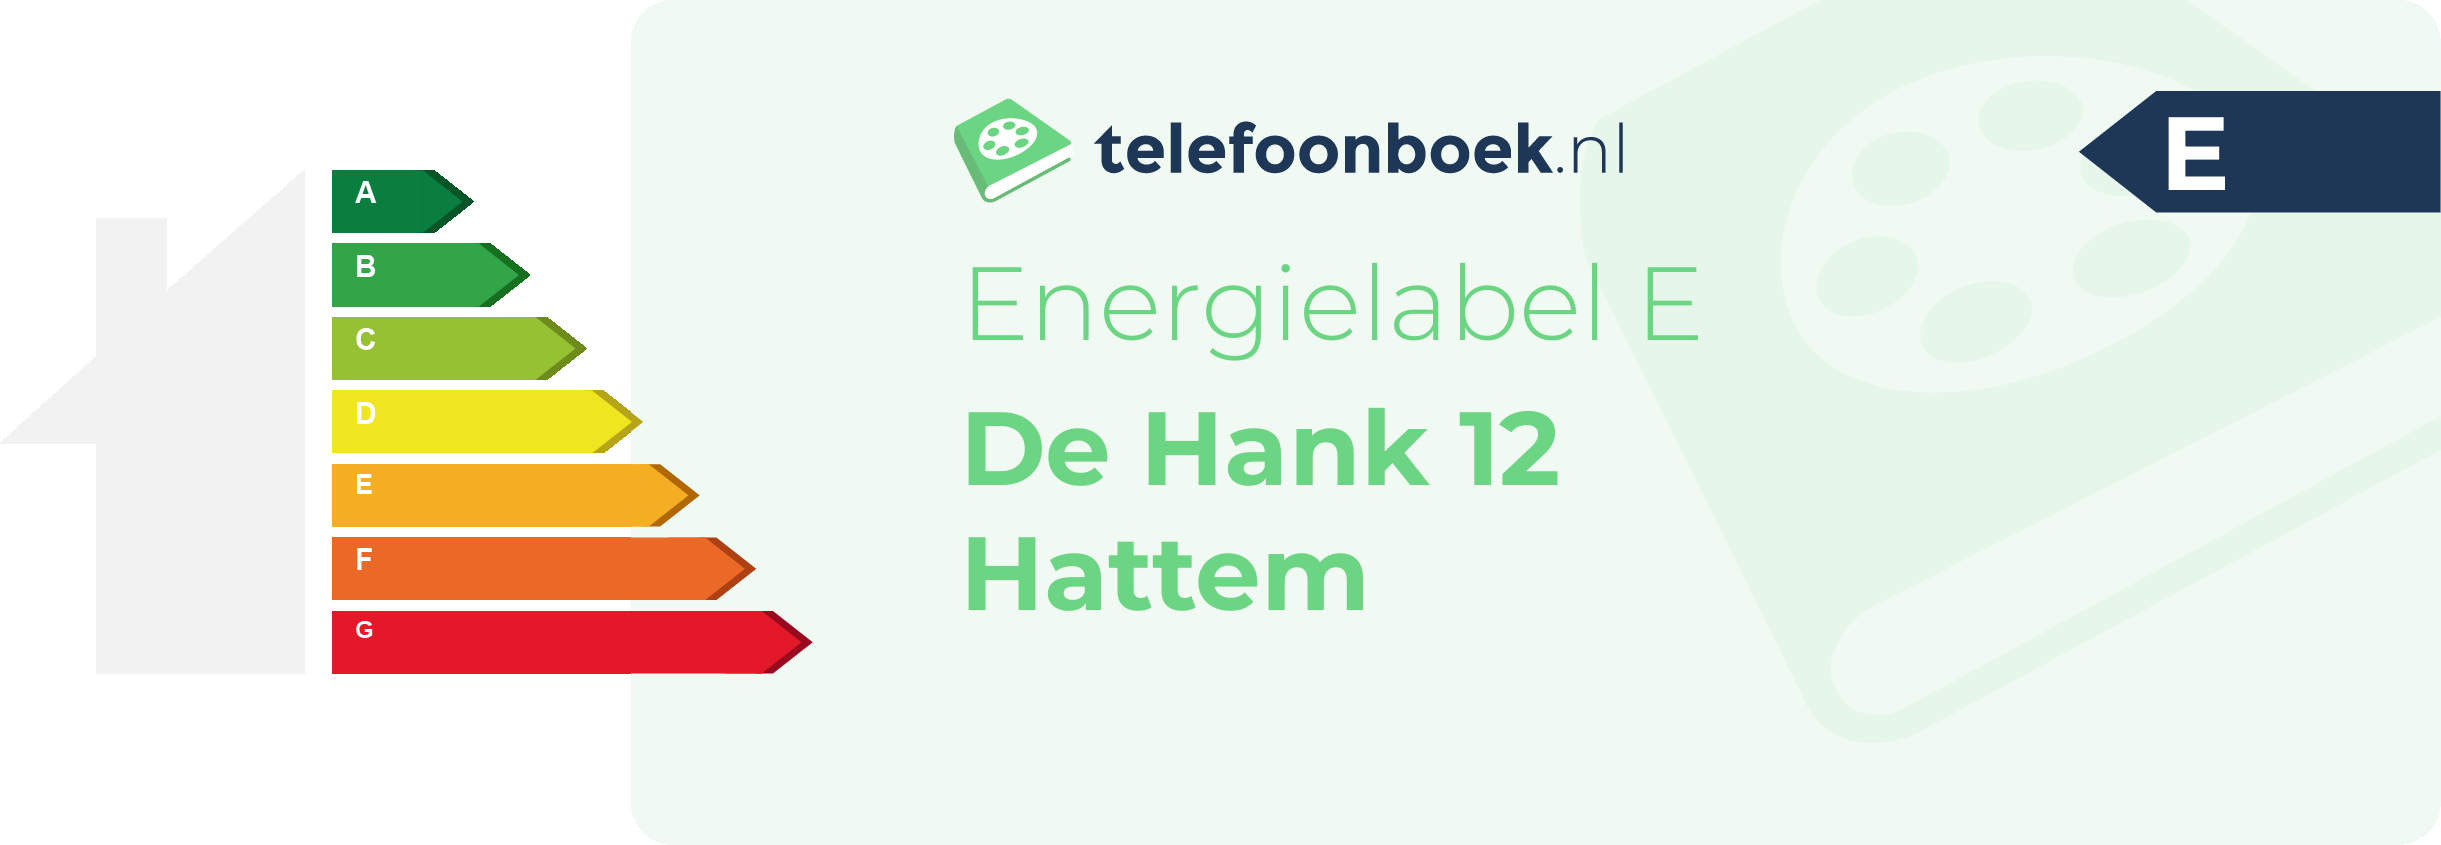 Energielabel De Hank 12 Hattem